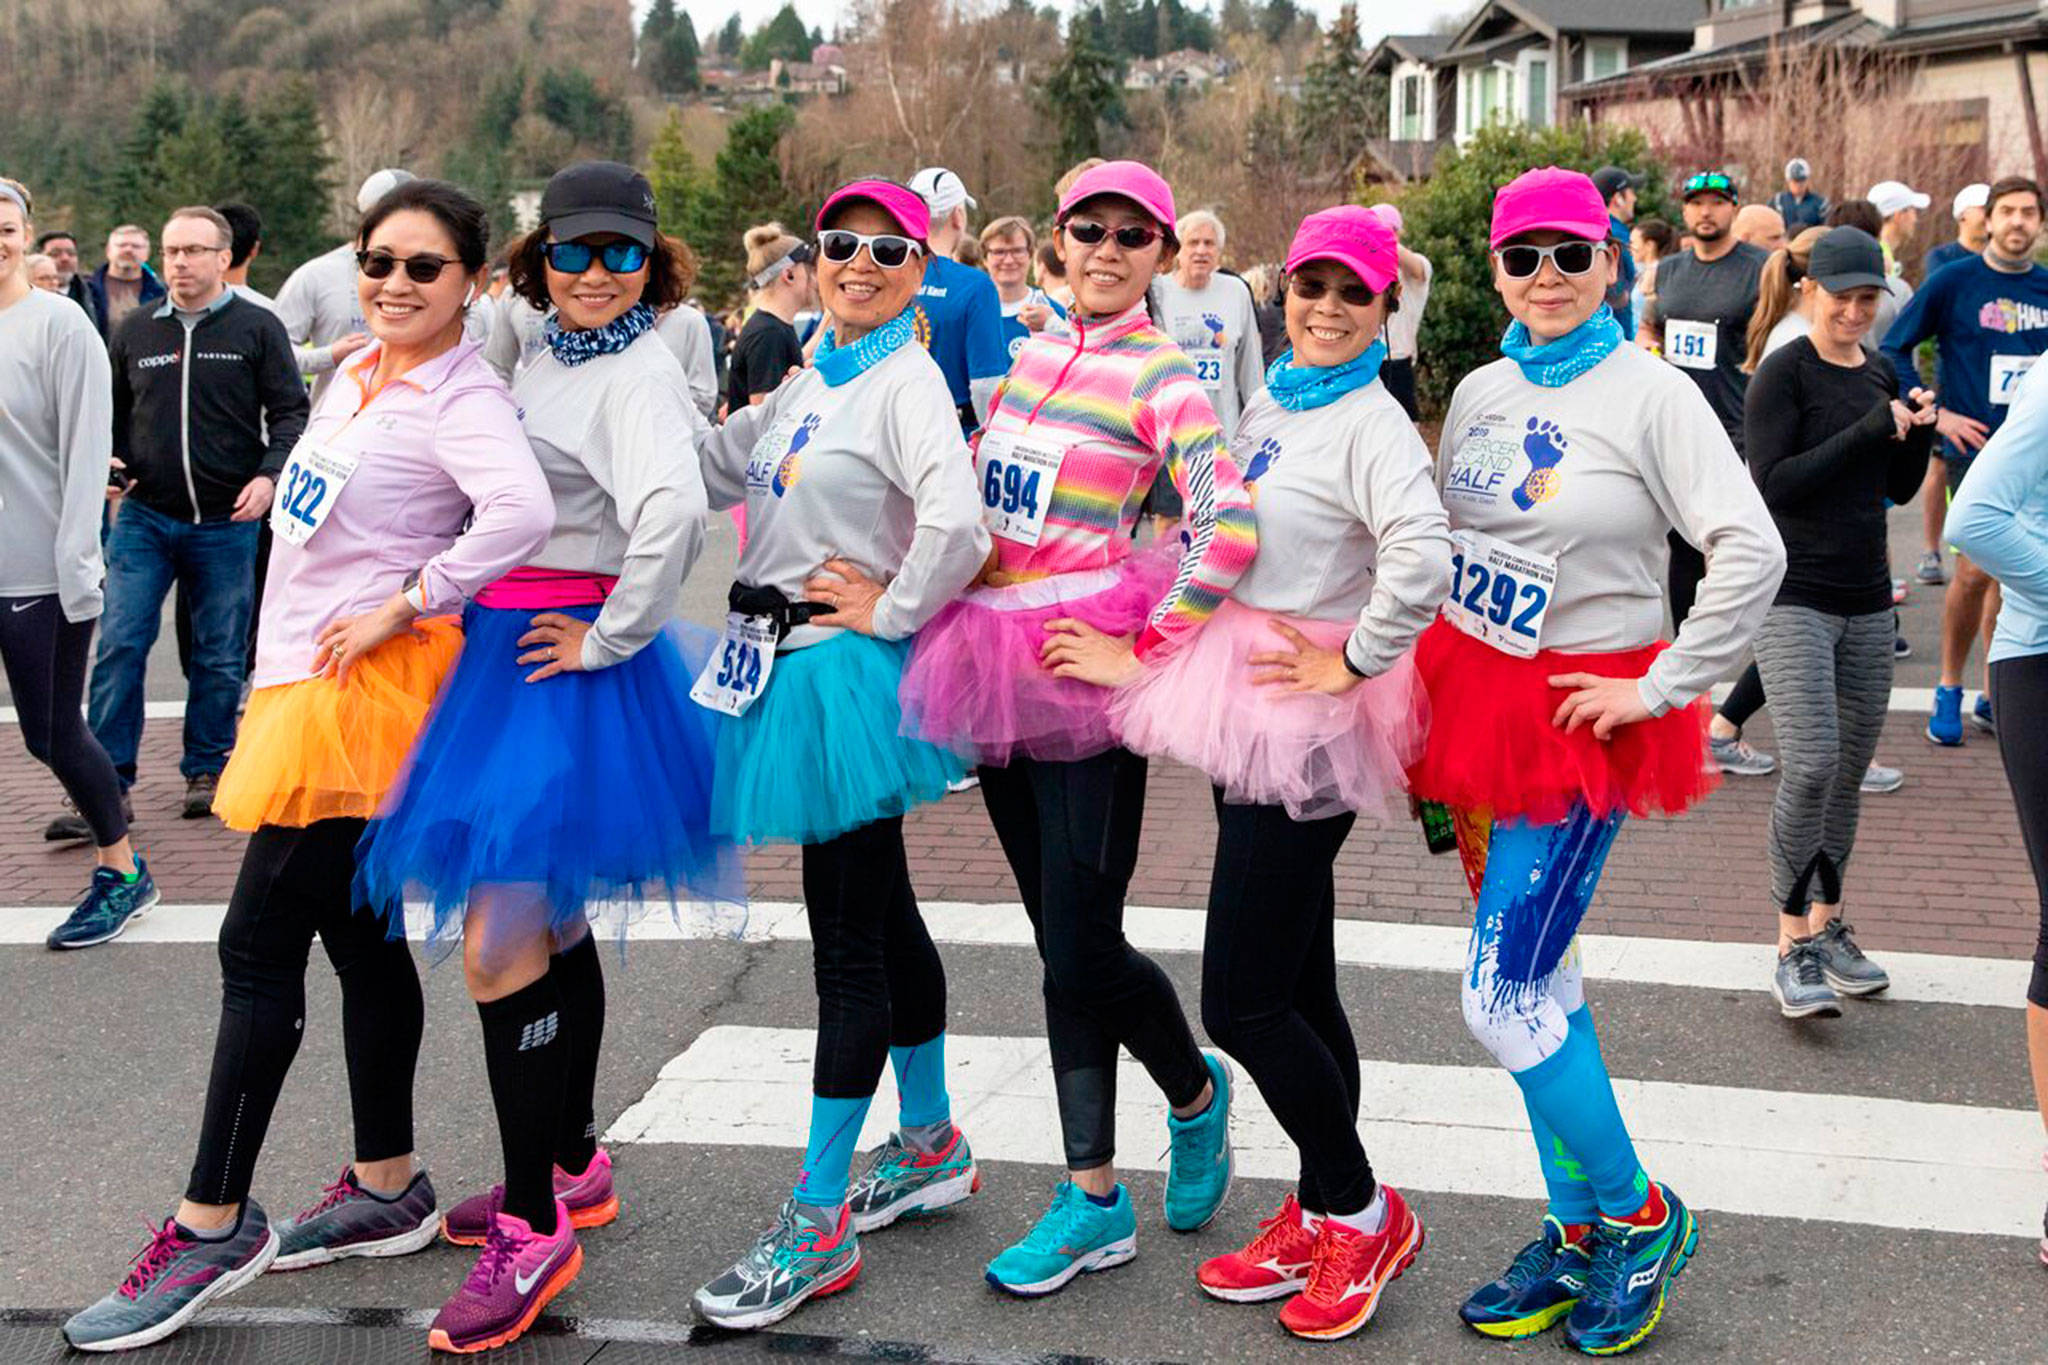 Women in tutus get ready to run at the Mercer Island Rotary Half Marathon on March 24. Photo courtesy of Gillian Peckham